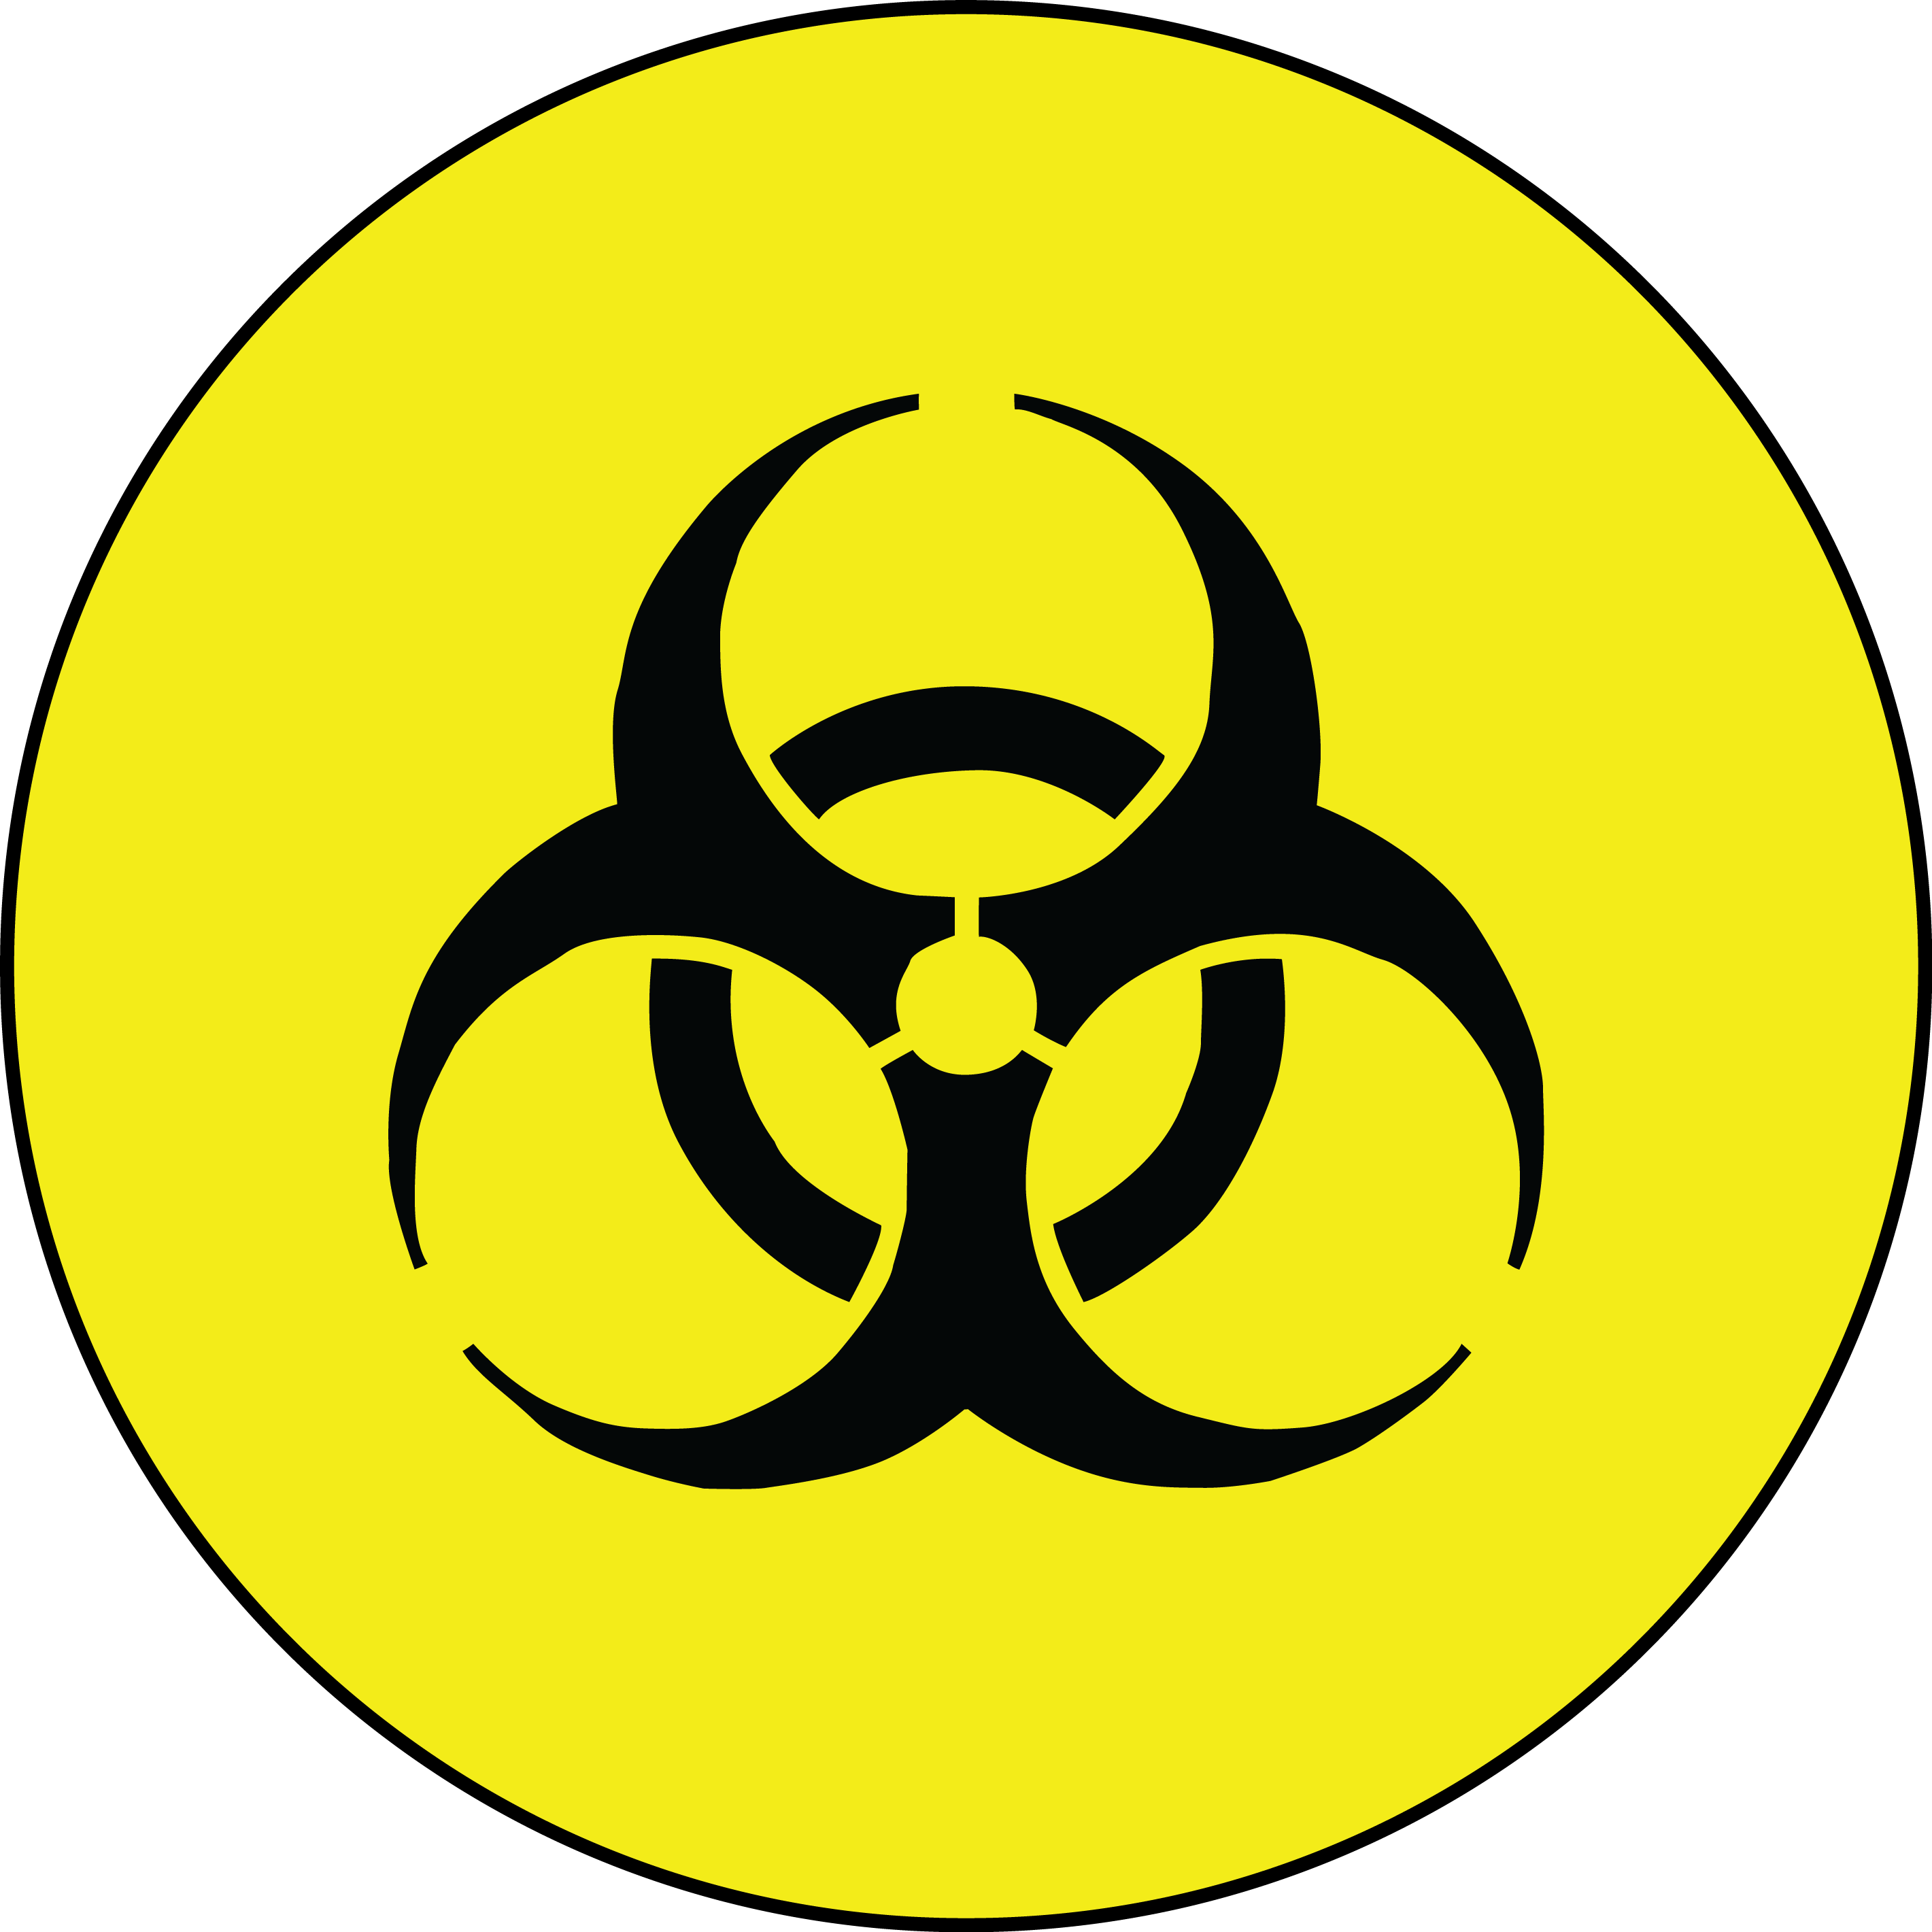 Free Biohazard Sign Png Download Free Biohazard Sign Png Png Images Free Cliparts On Clipart Library